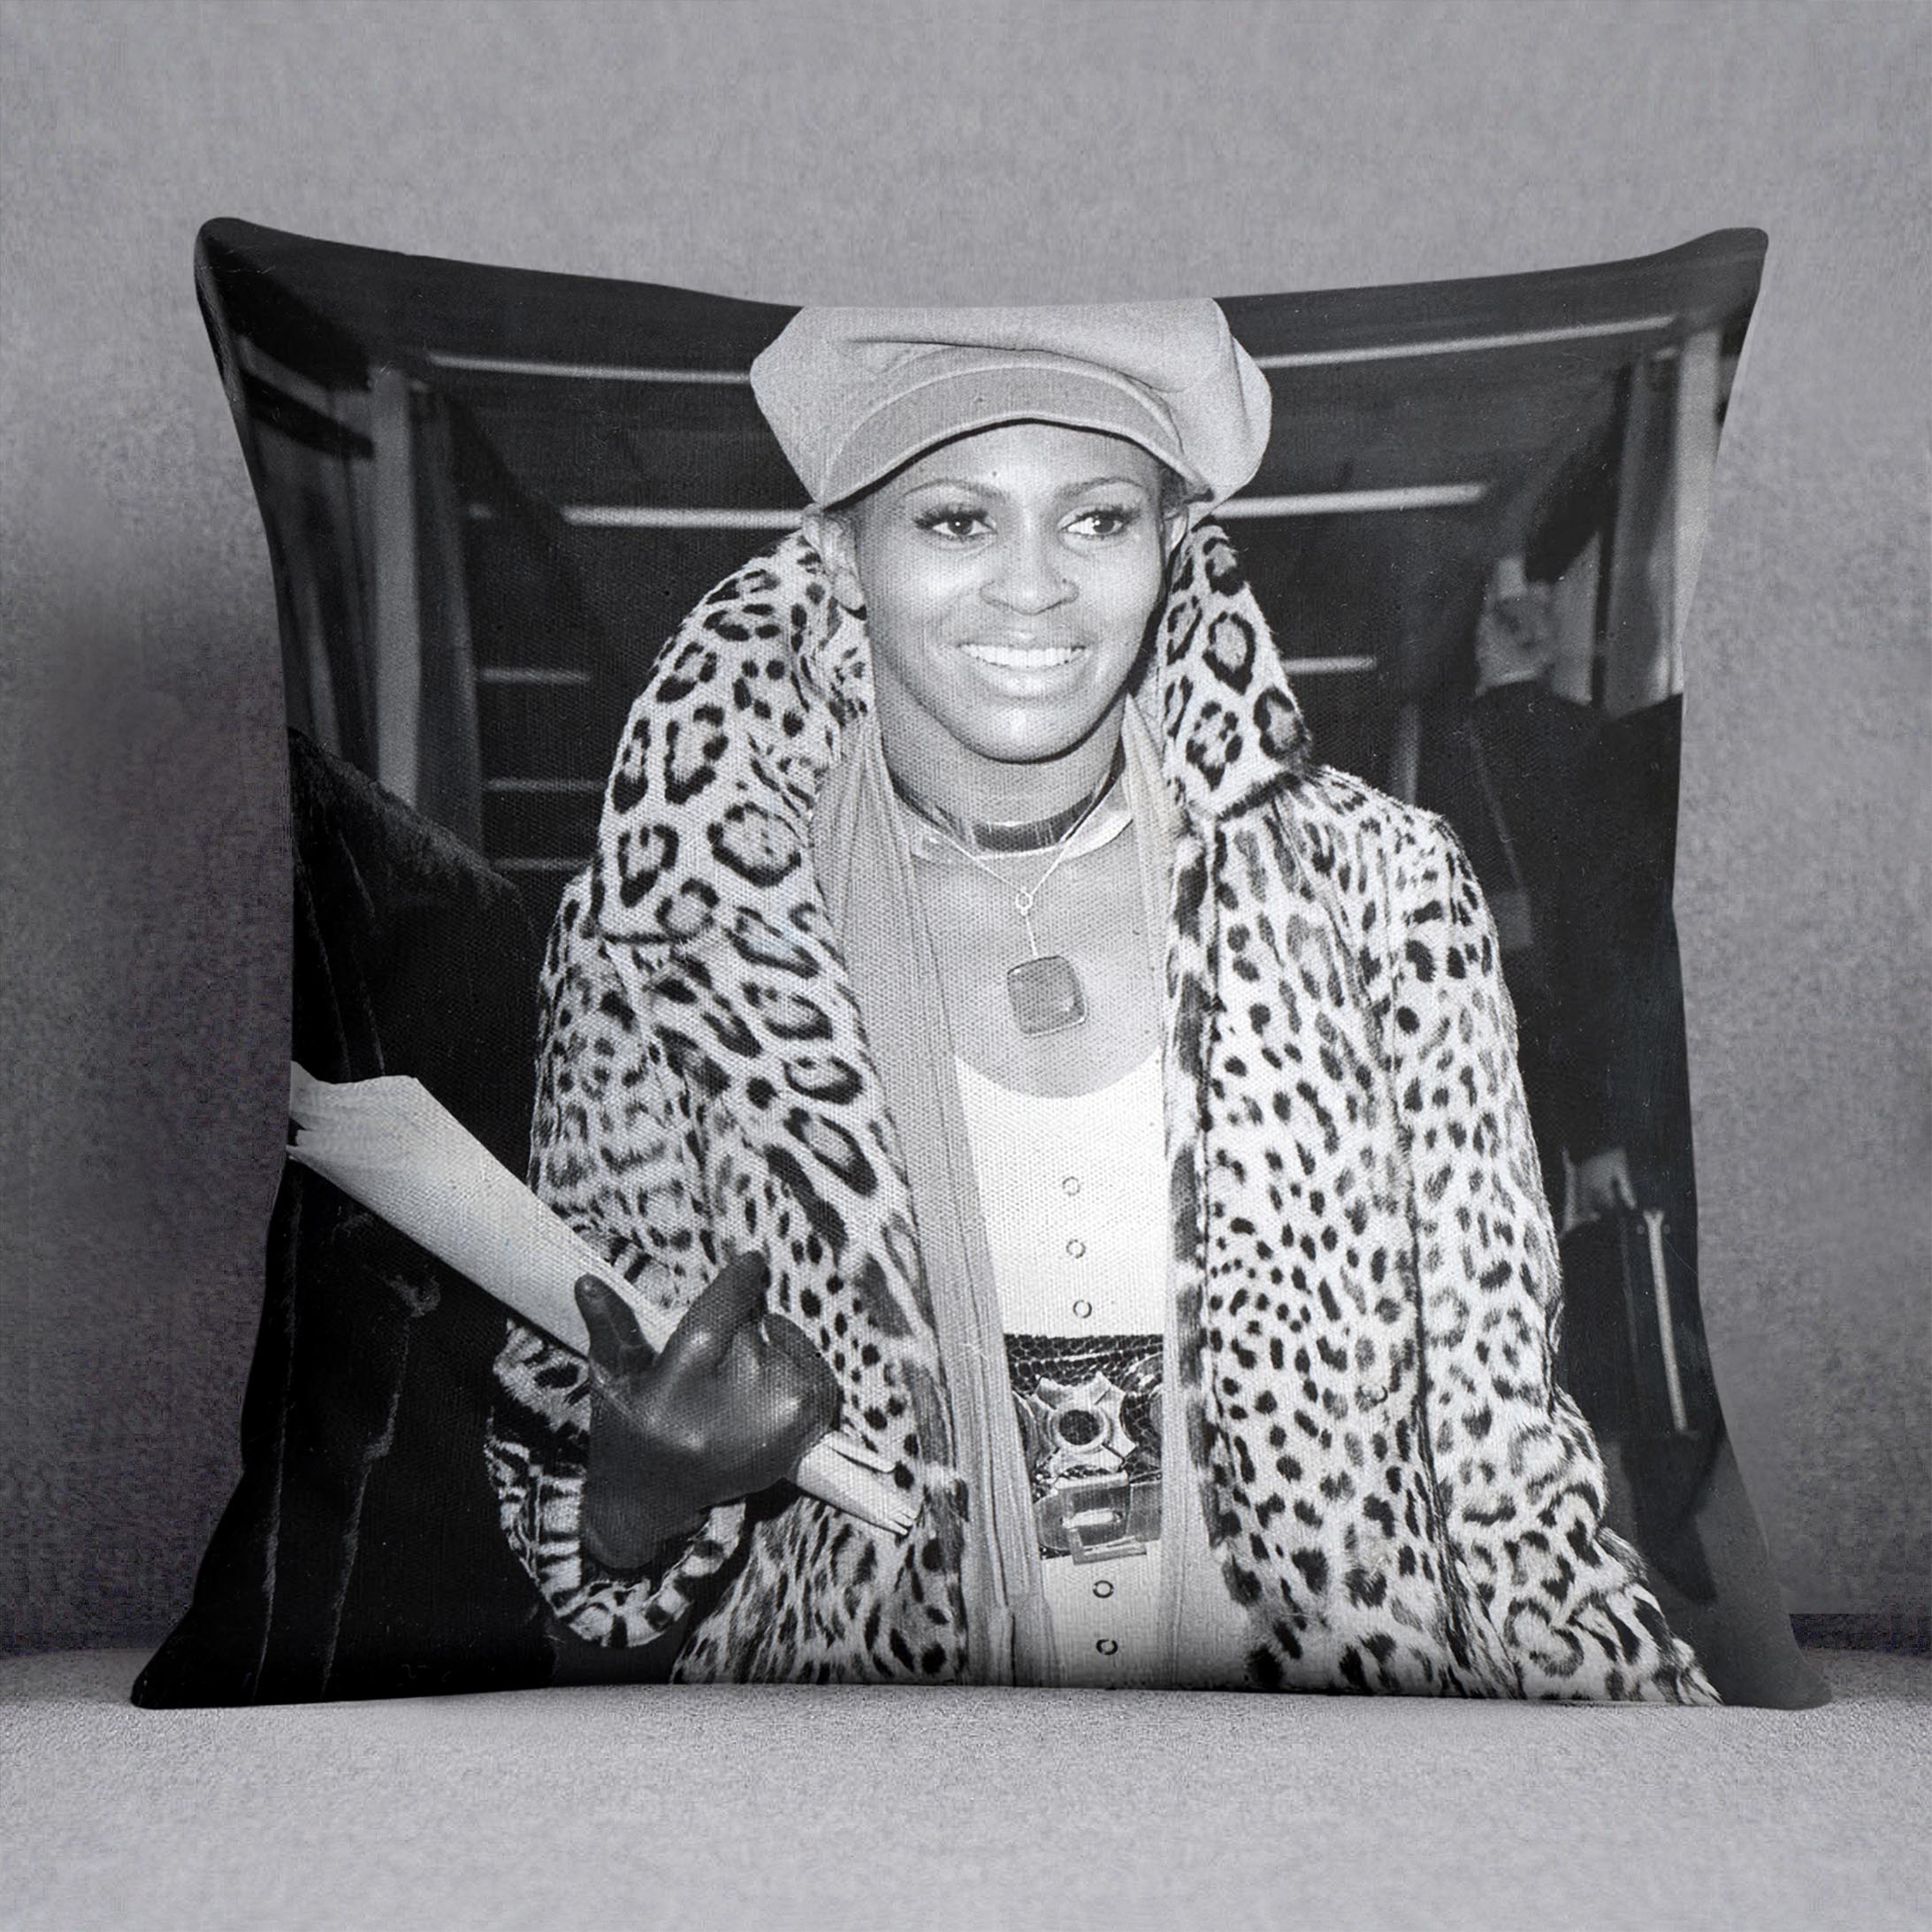 Tina Turner in leopard Cushion